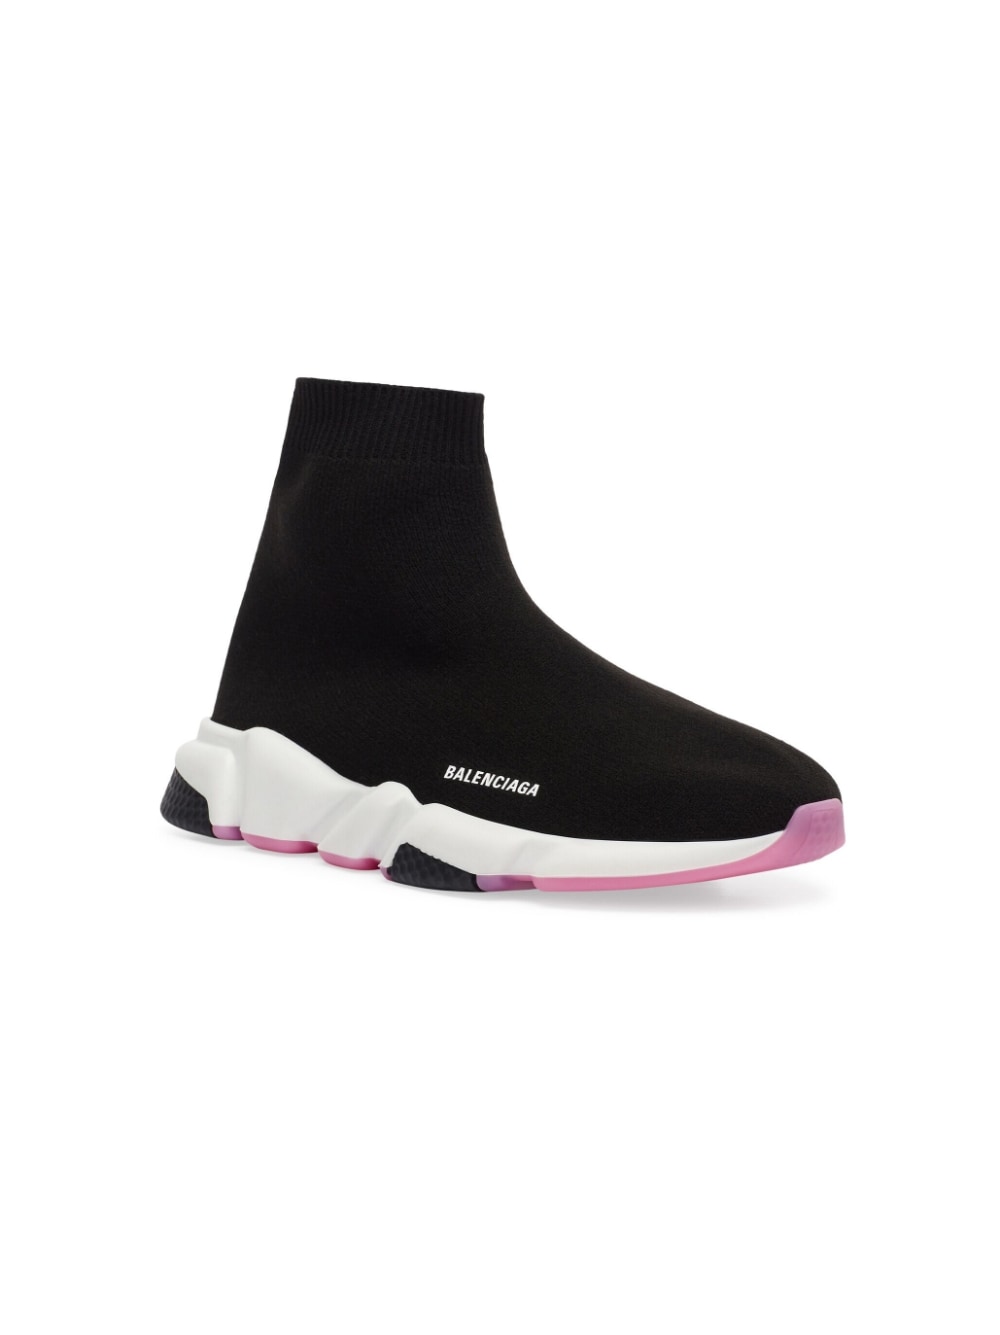 Balenciaga Kids Speed sock-style sneakers - BLAC/WG/BLAC/NPINK